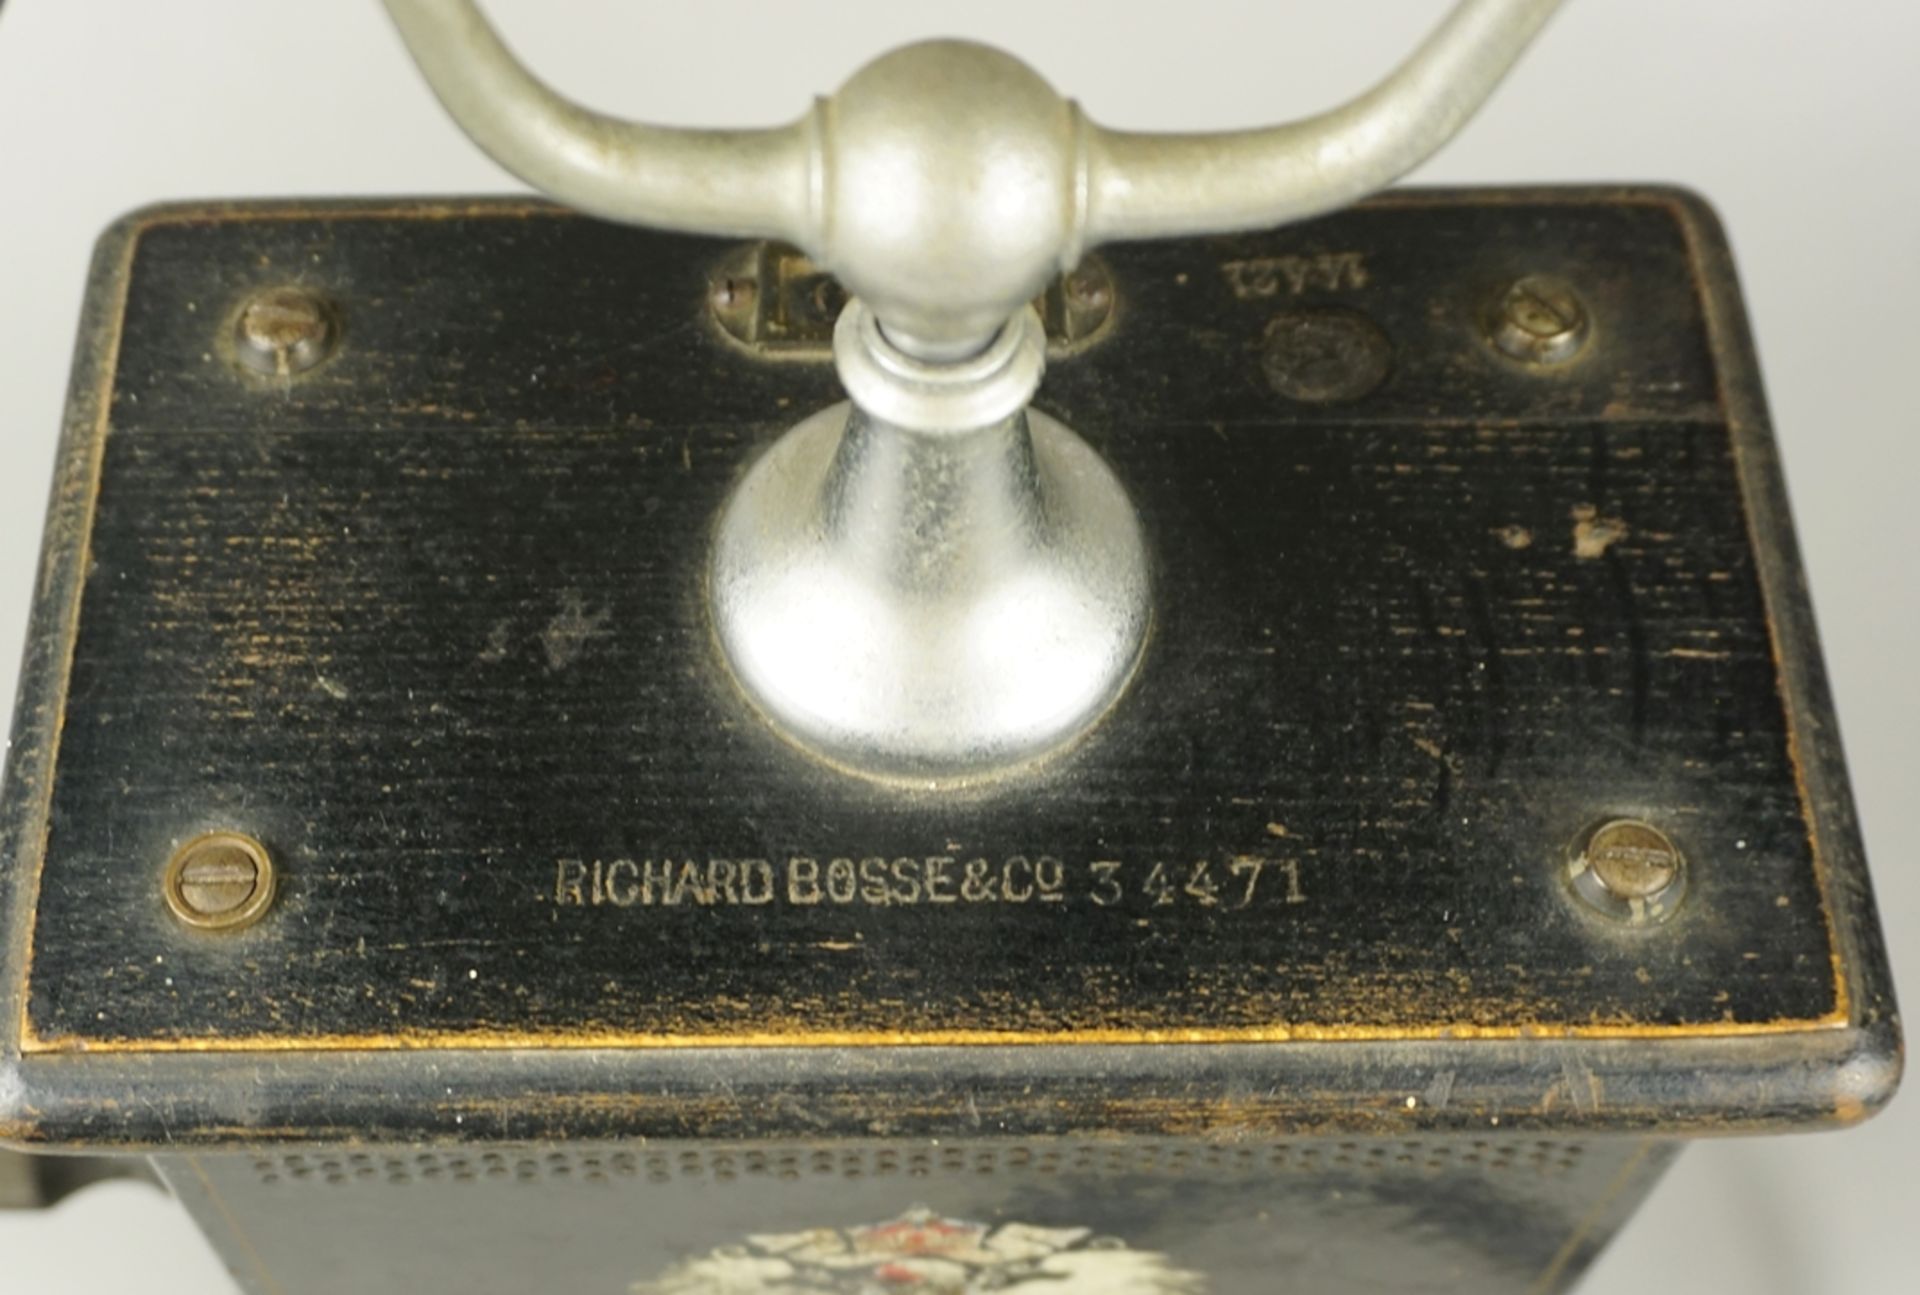 Kurbel-Telefon, Telephon- u.Telegraphenbau Anstalt "Richard Bosse&Co"., Berlin, Kaiserreich - Image 3 of 3